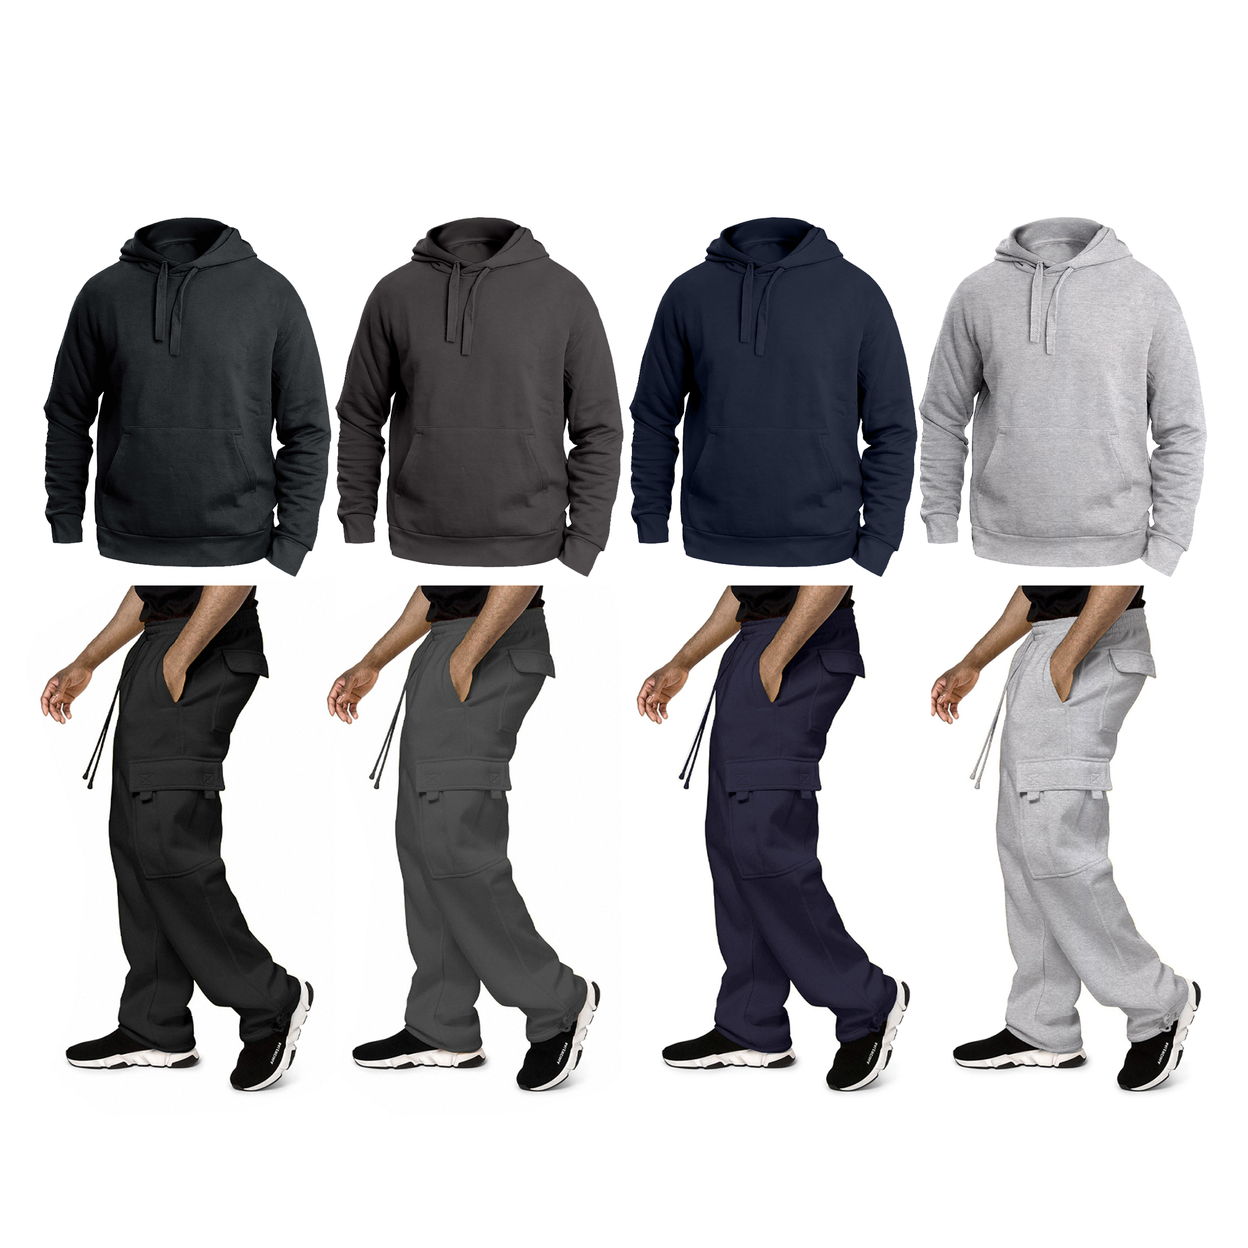 Multi-Pack: Big & Tall Men's Winter Warm Cozy Athletic Fleece Lined Multi-Pocket Cargo Sweatsuit - Navy, 2-pack, X-large